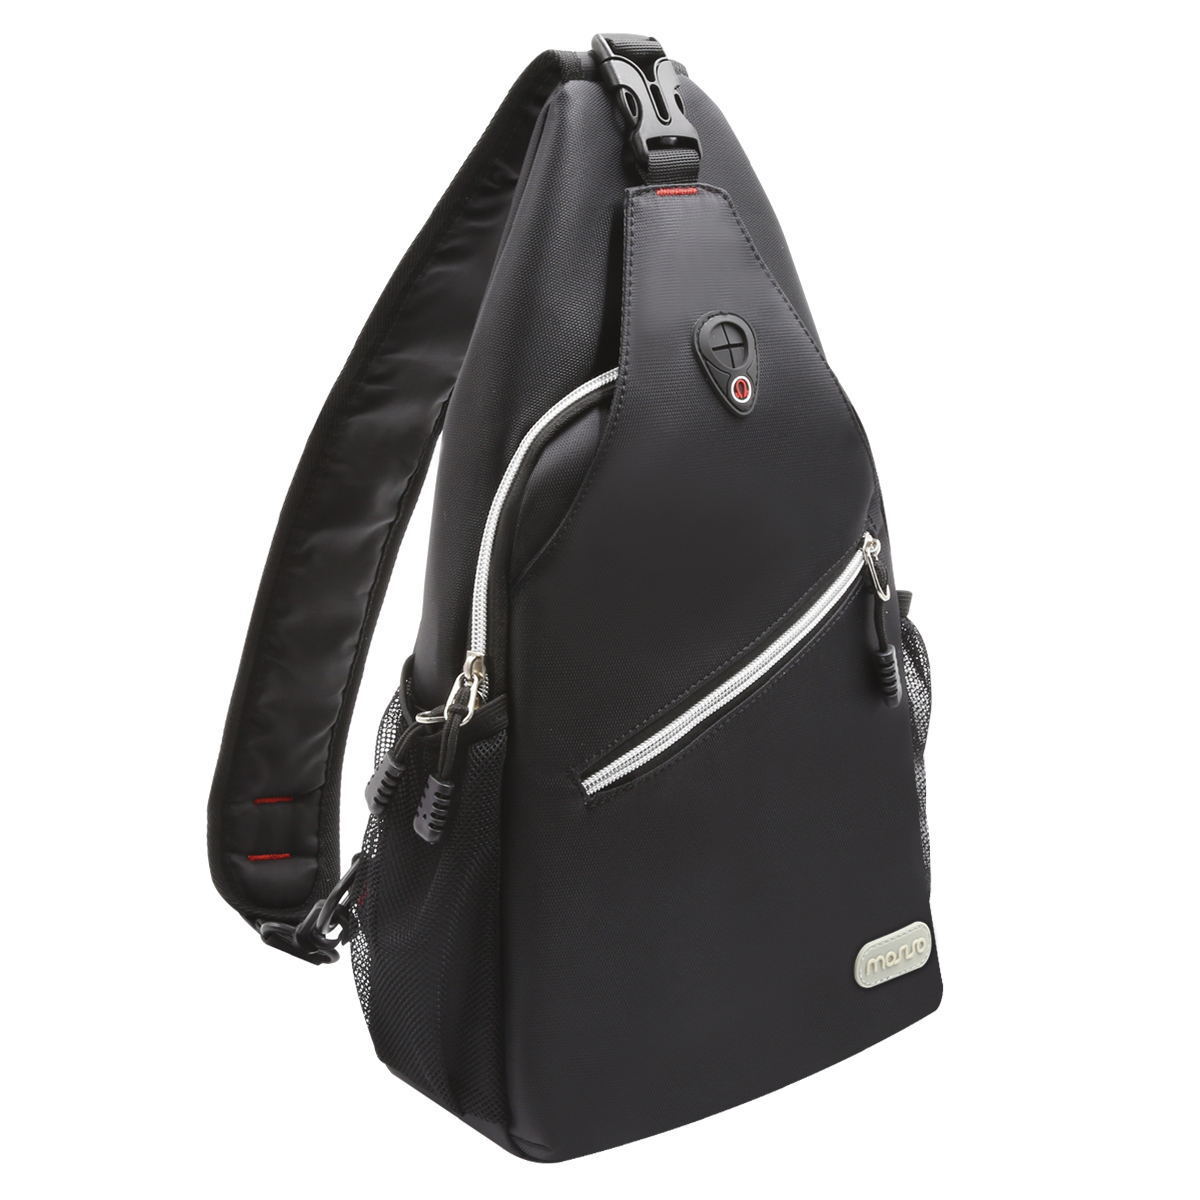 MOSISO Sling Backpack Multipurpose Travel Hiking Daypack Crossbody Shoulder Bag